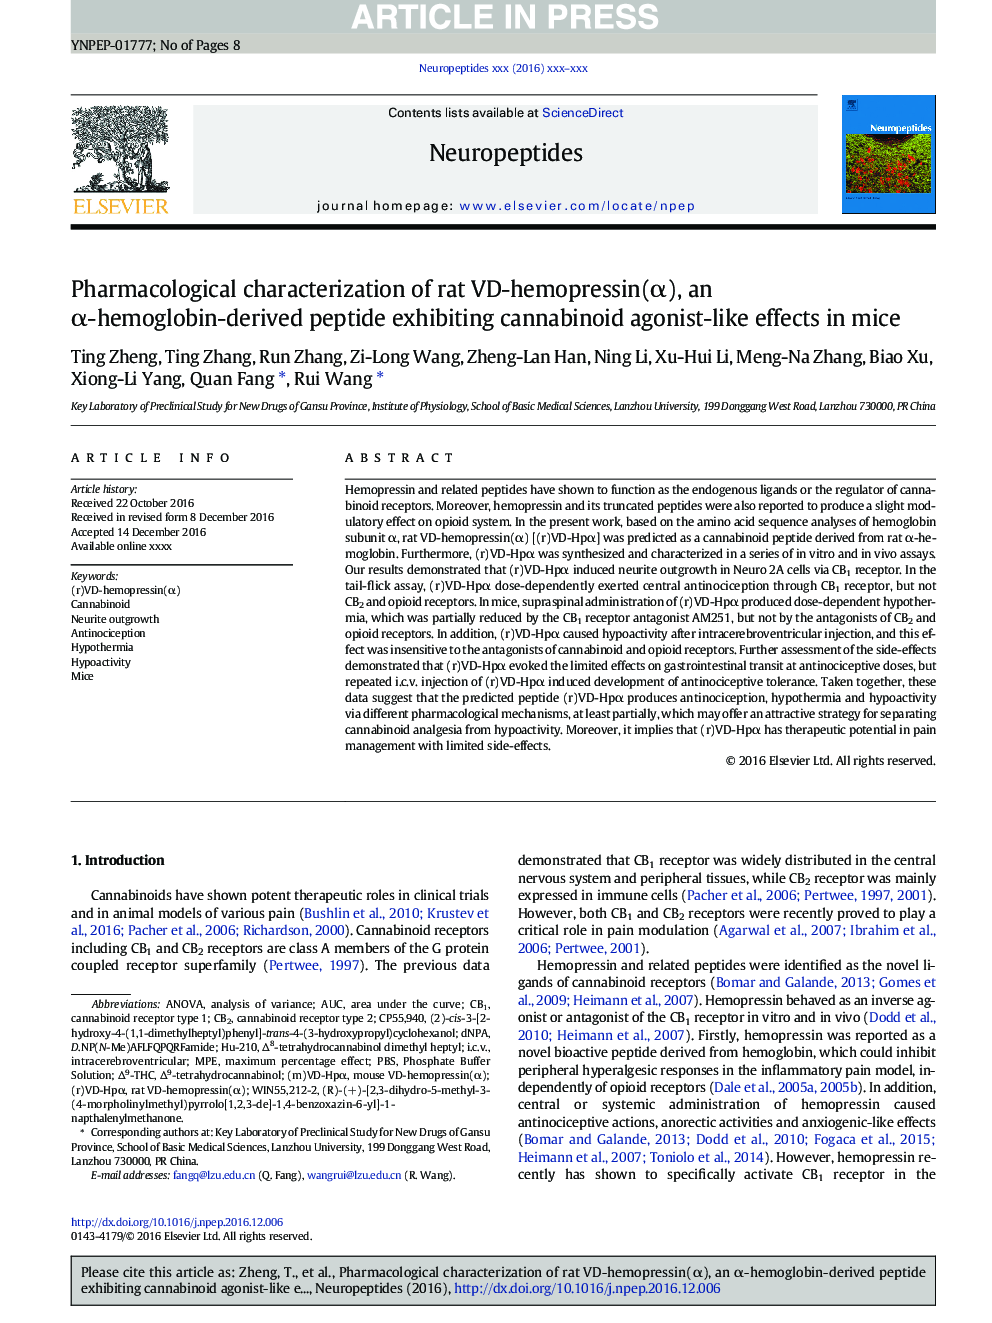 Pharmacological characterization of rat VD-hemopressin(Î±), an Î±-hemoglobin-derived peptide exhibiting cannabinoid agonist-like effects in mice